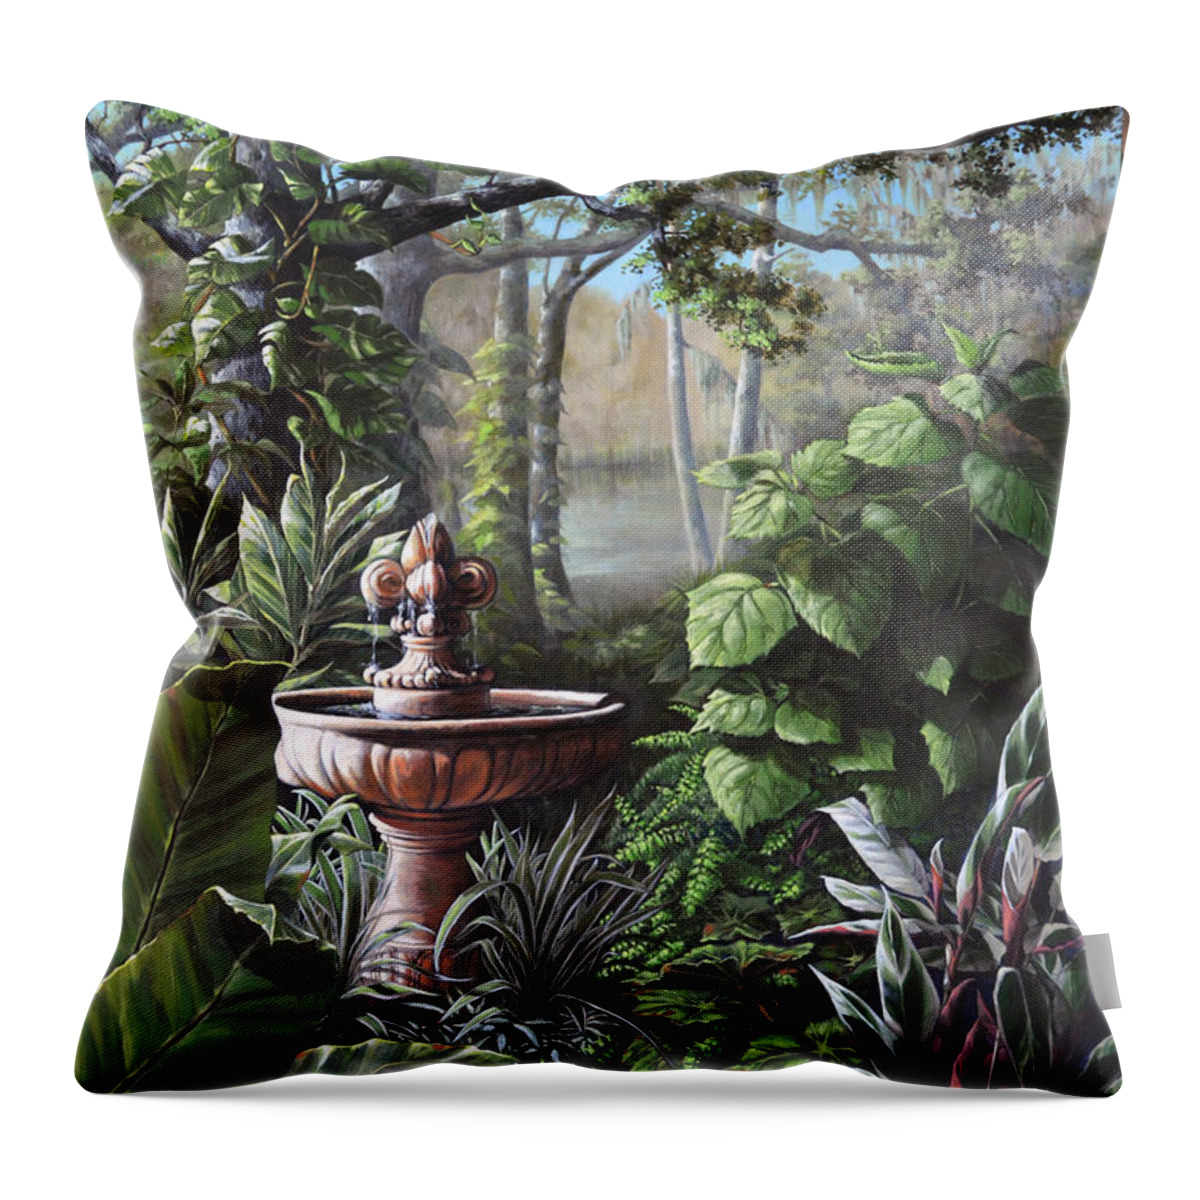 Garden Throw Pillow featuring the painting Florida Tropical Garden by Joan Garcia